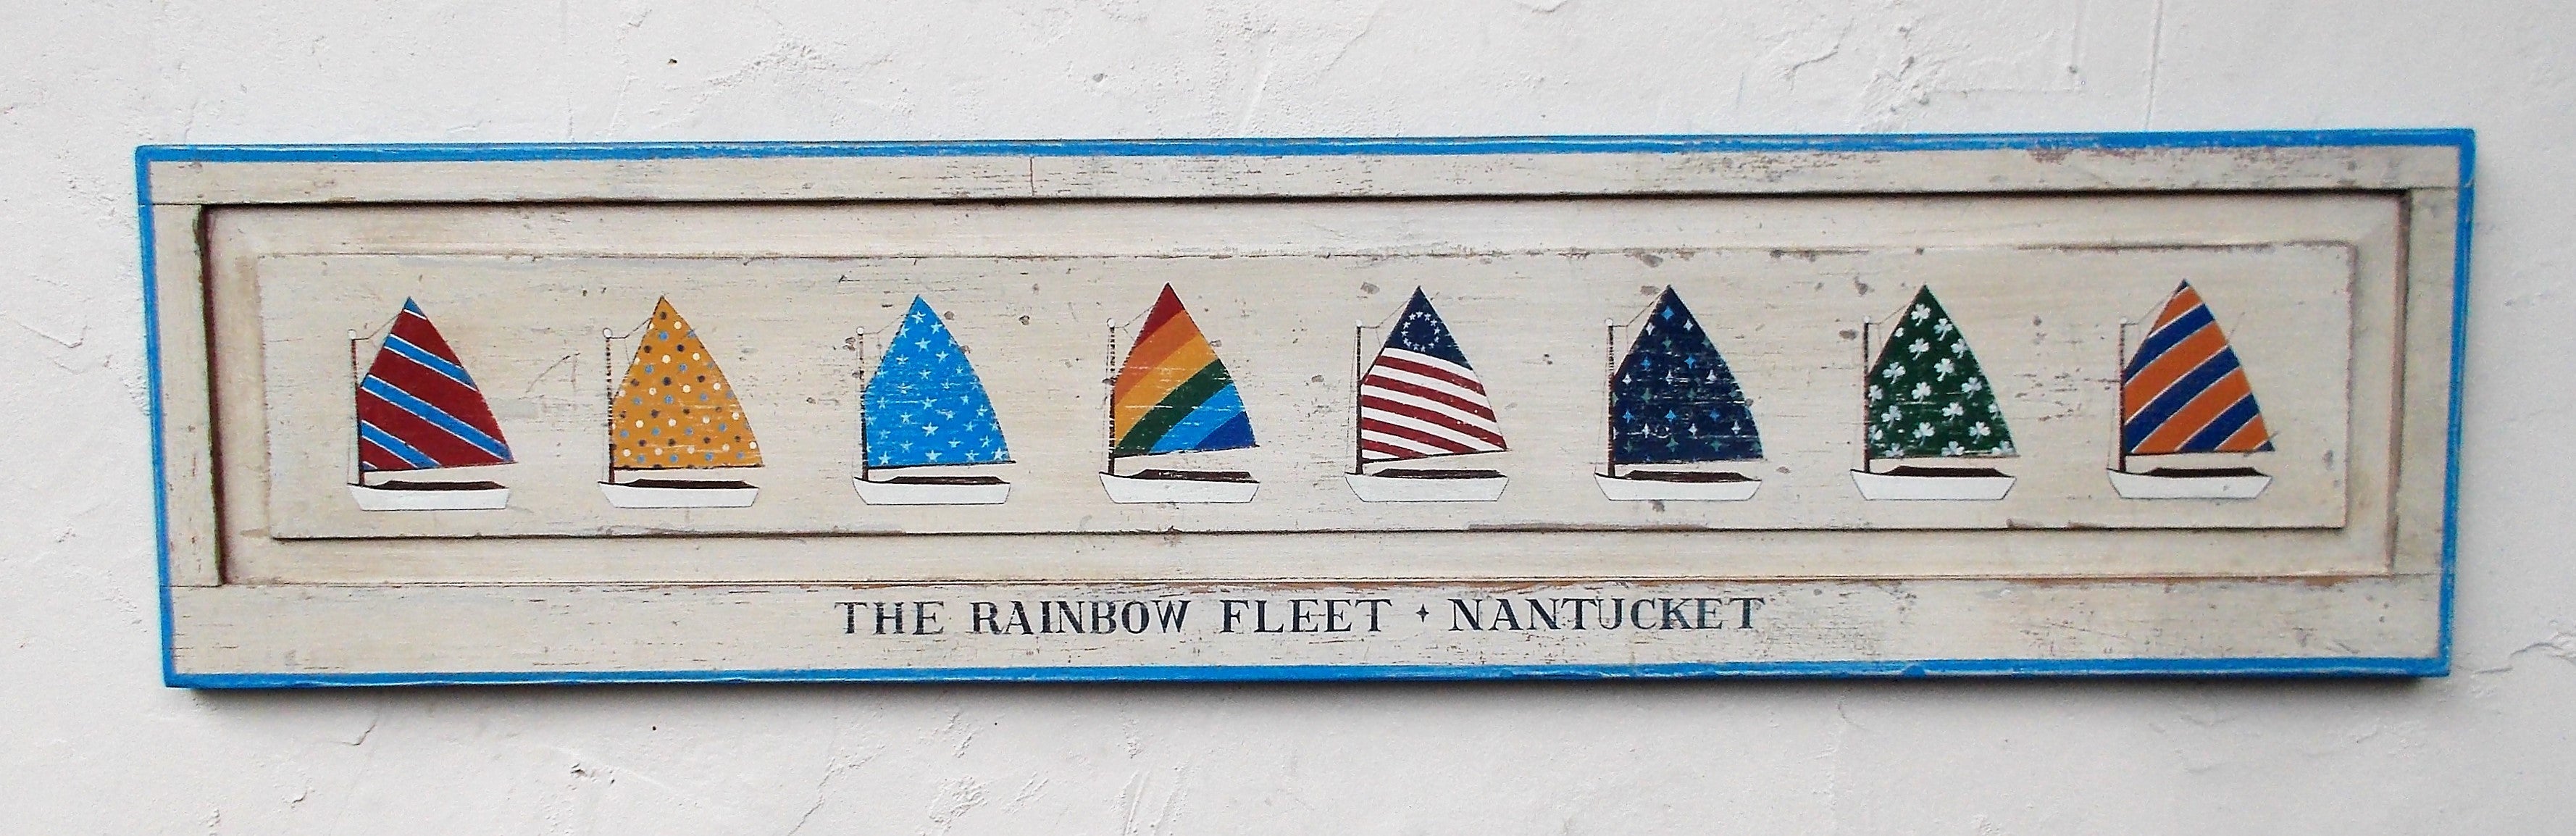 The Rainbow Fleet Nantucket